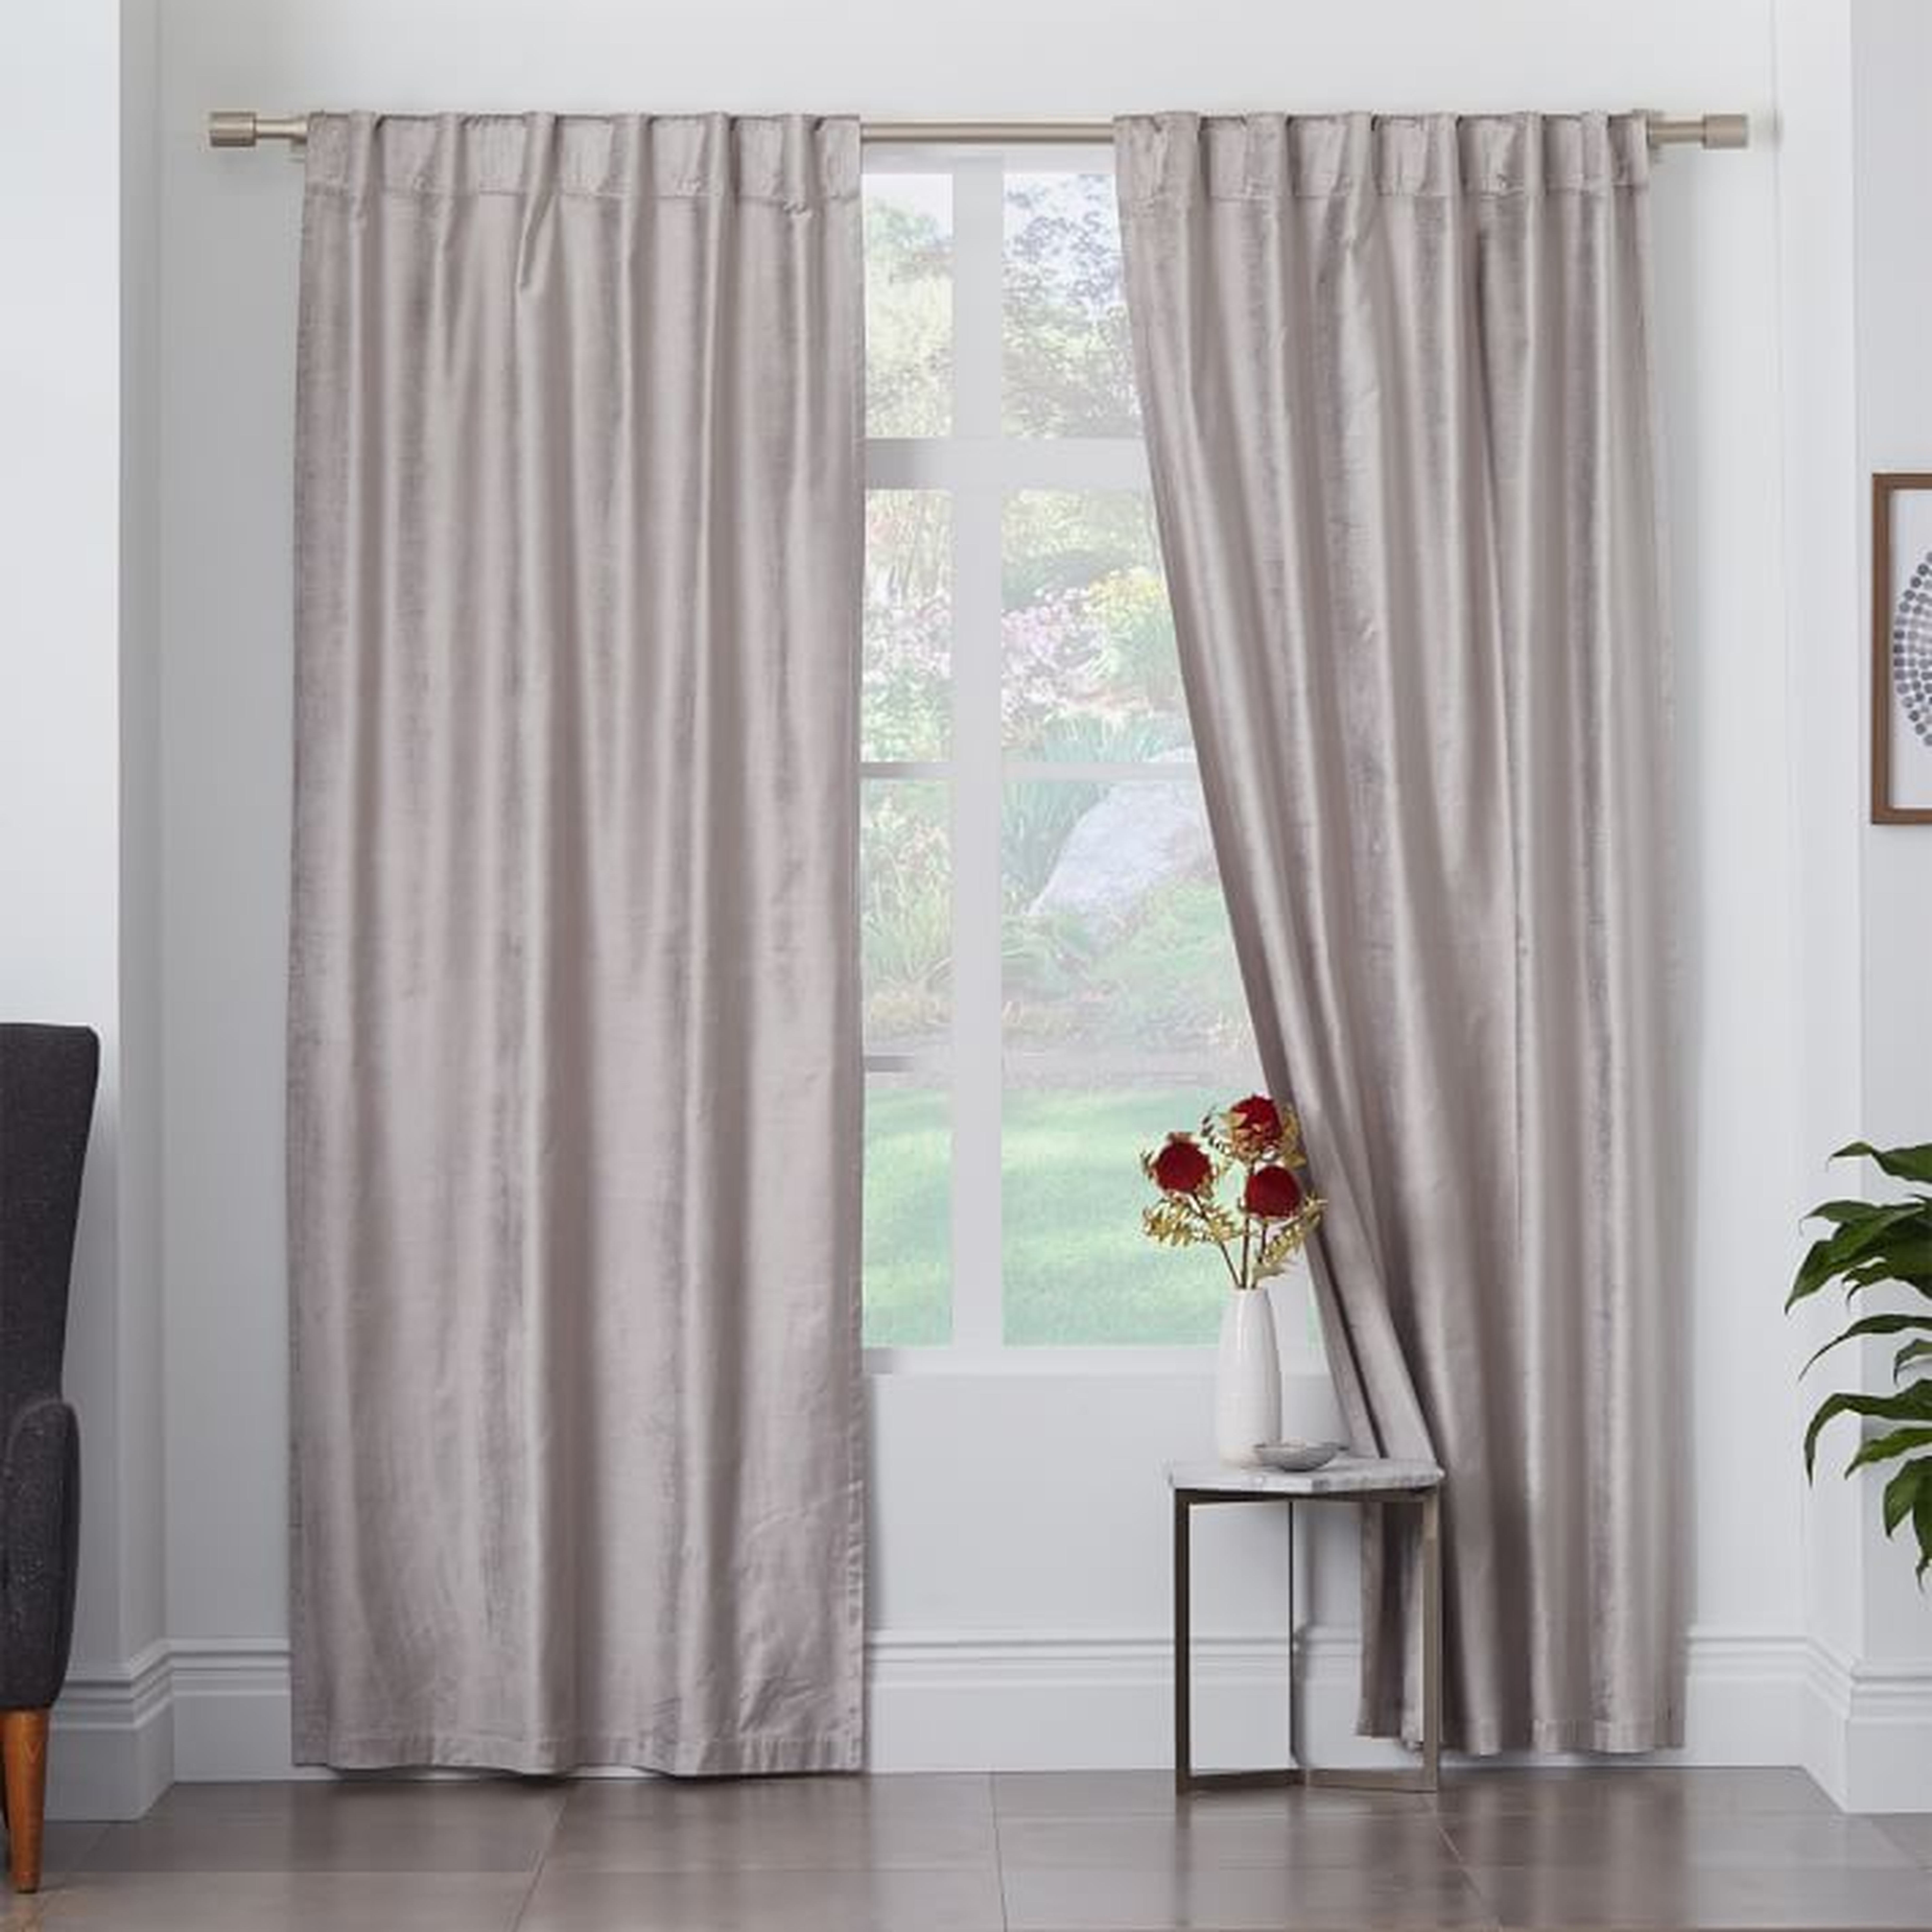 Cotton Luster Velvet Curtain - Platimun, single panel - UNLINED - West Elm